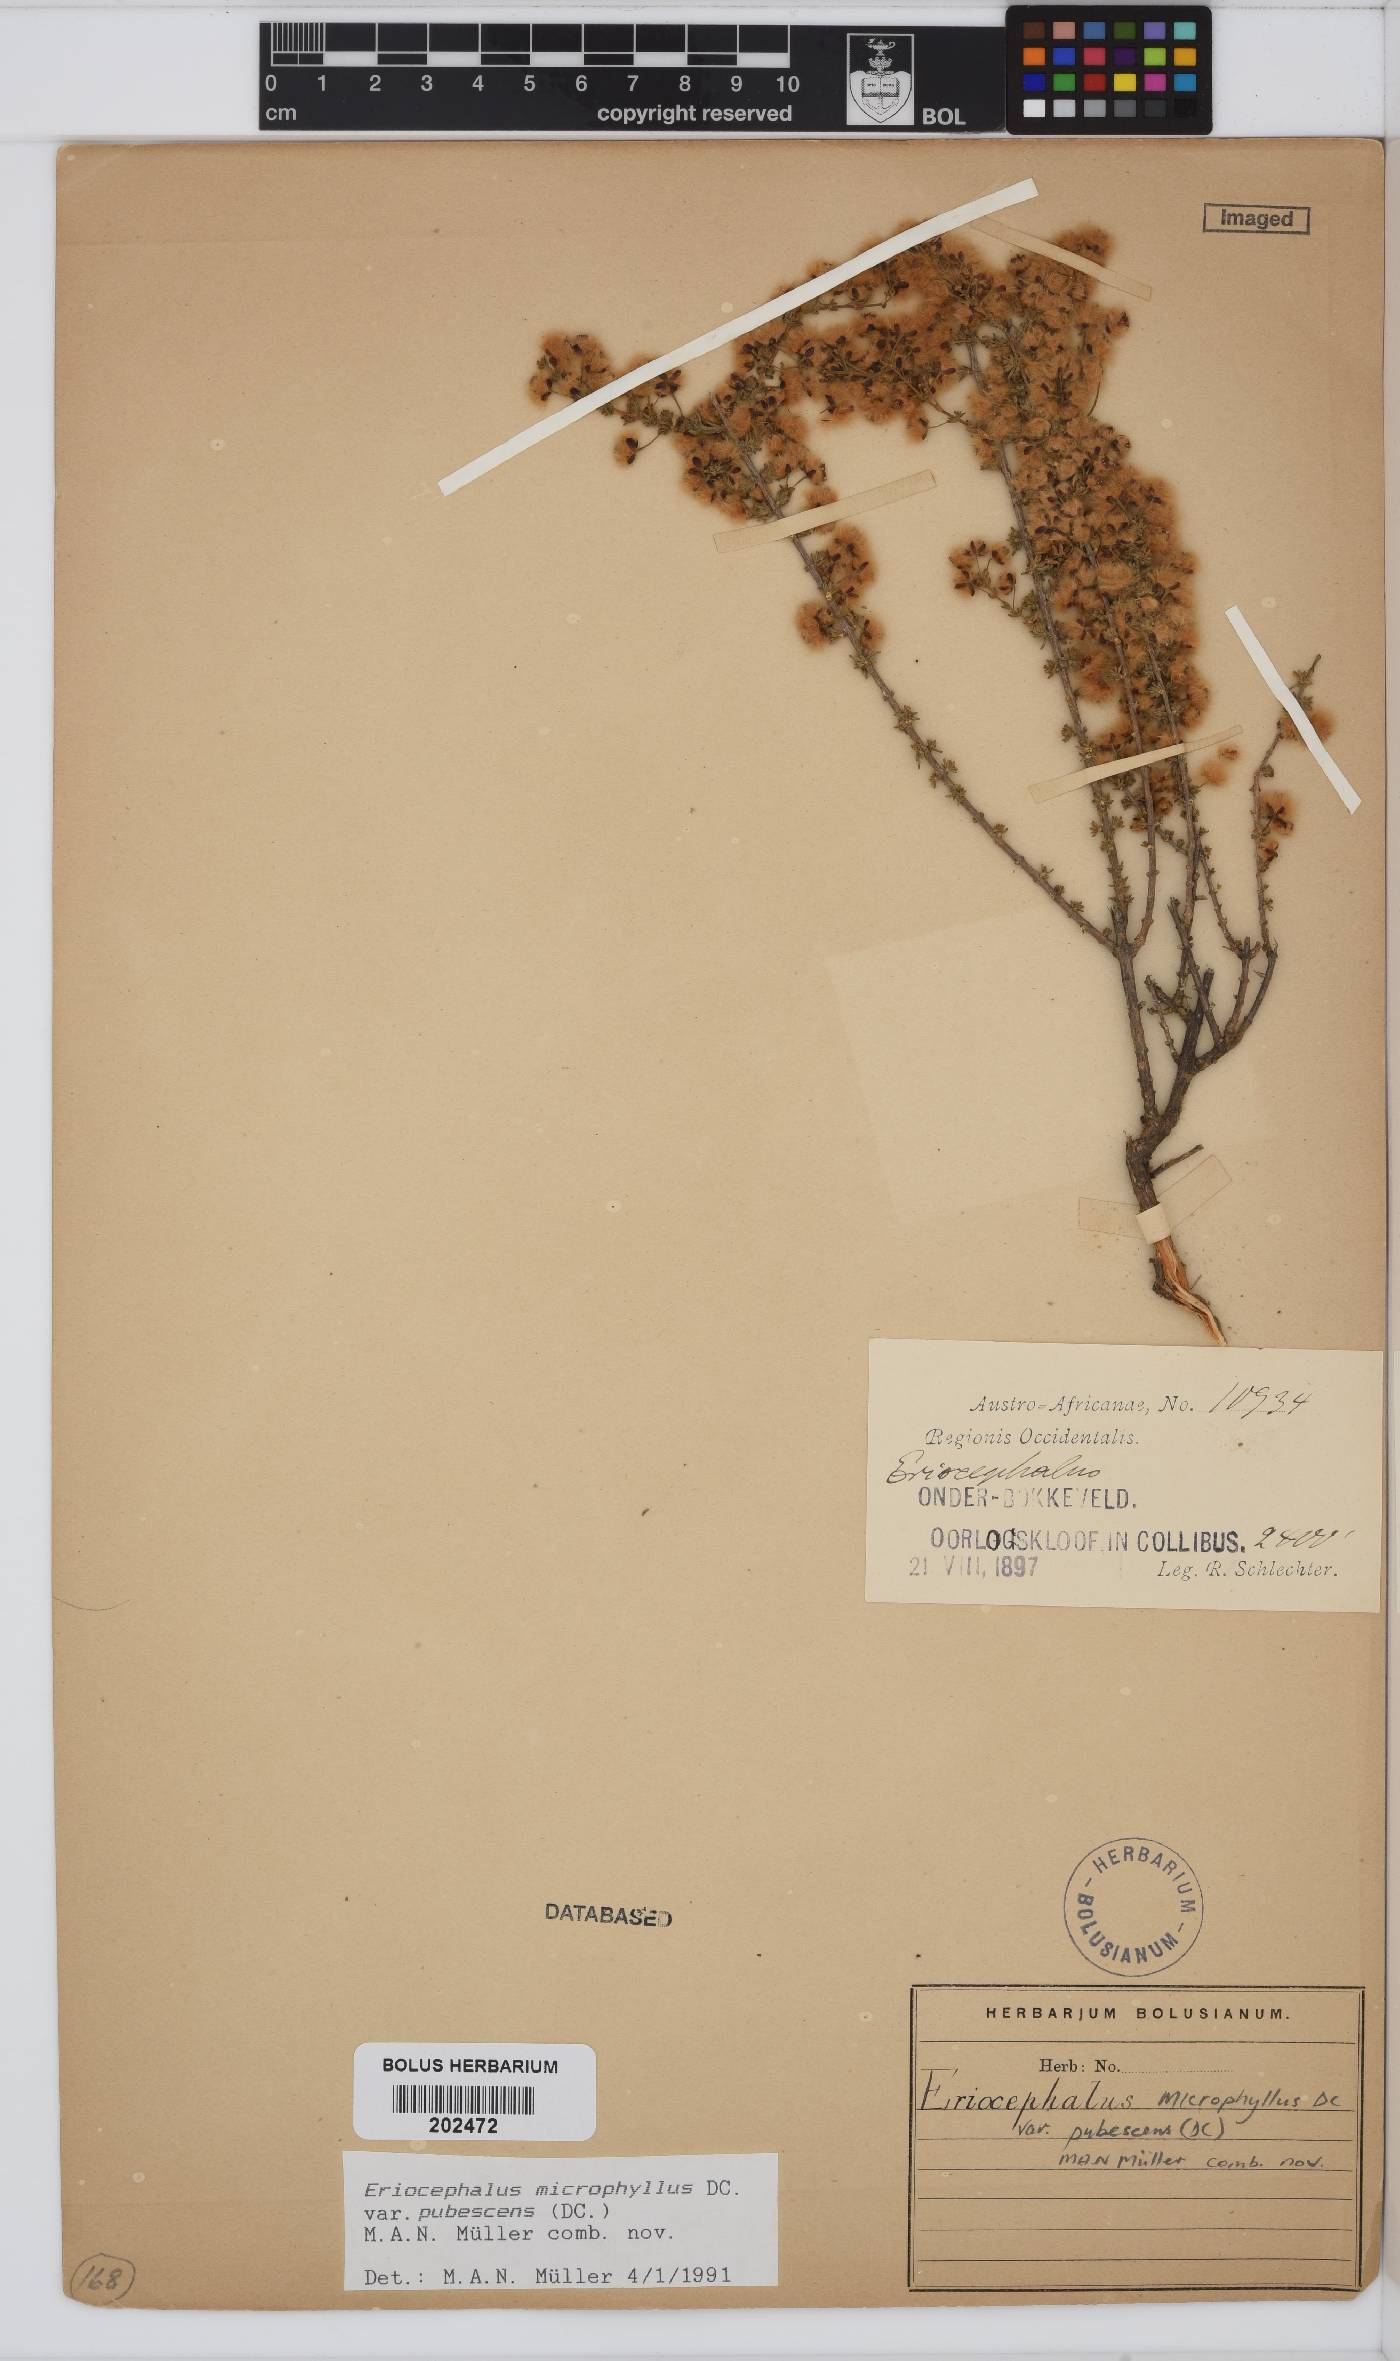 Eriocephalus microphyllus var. pubescens image